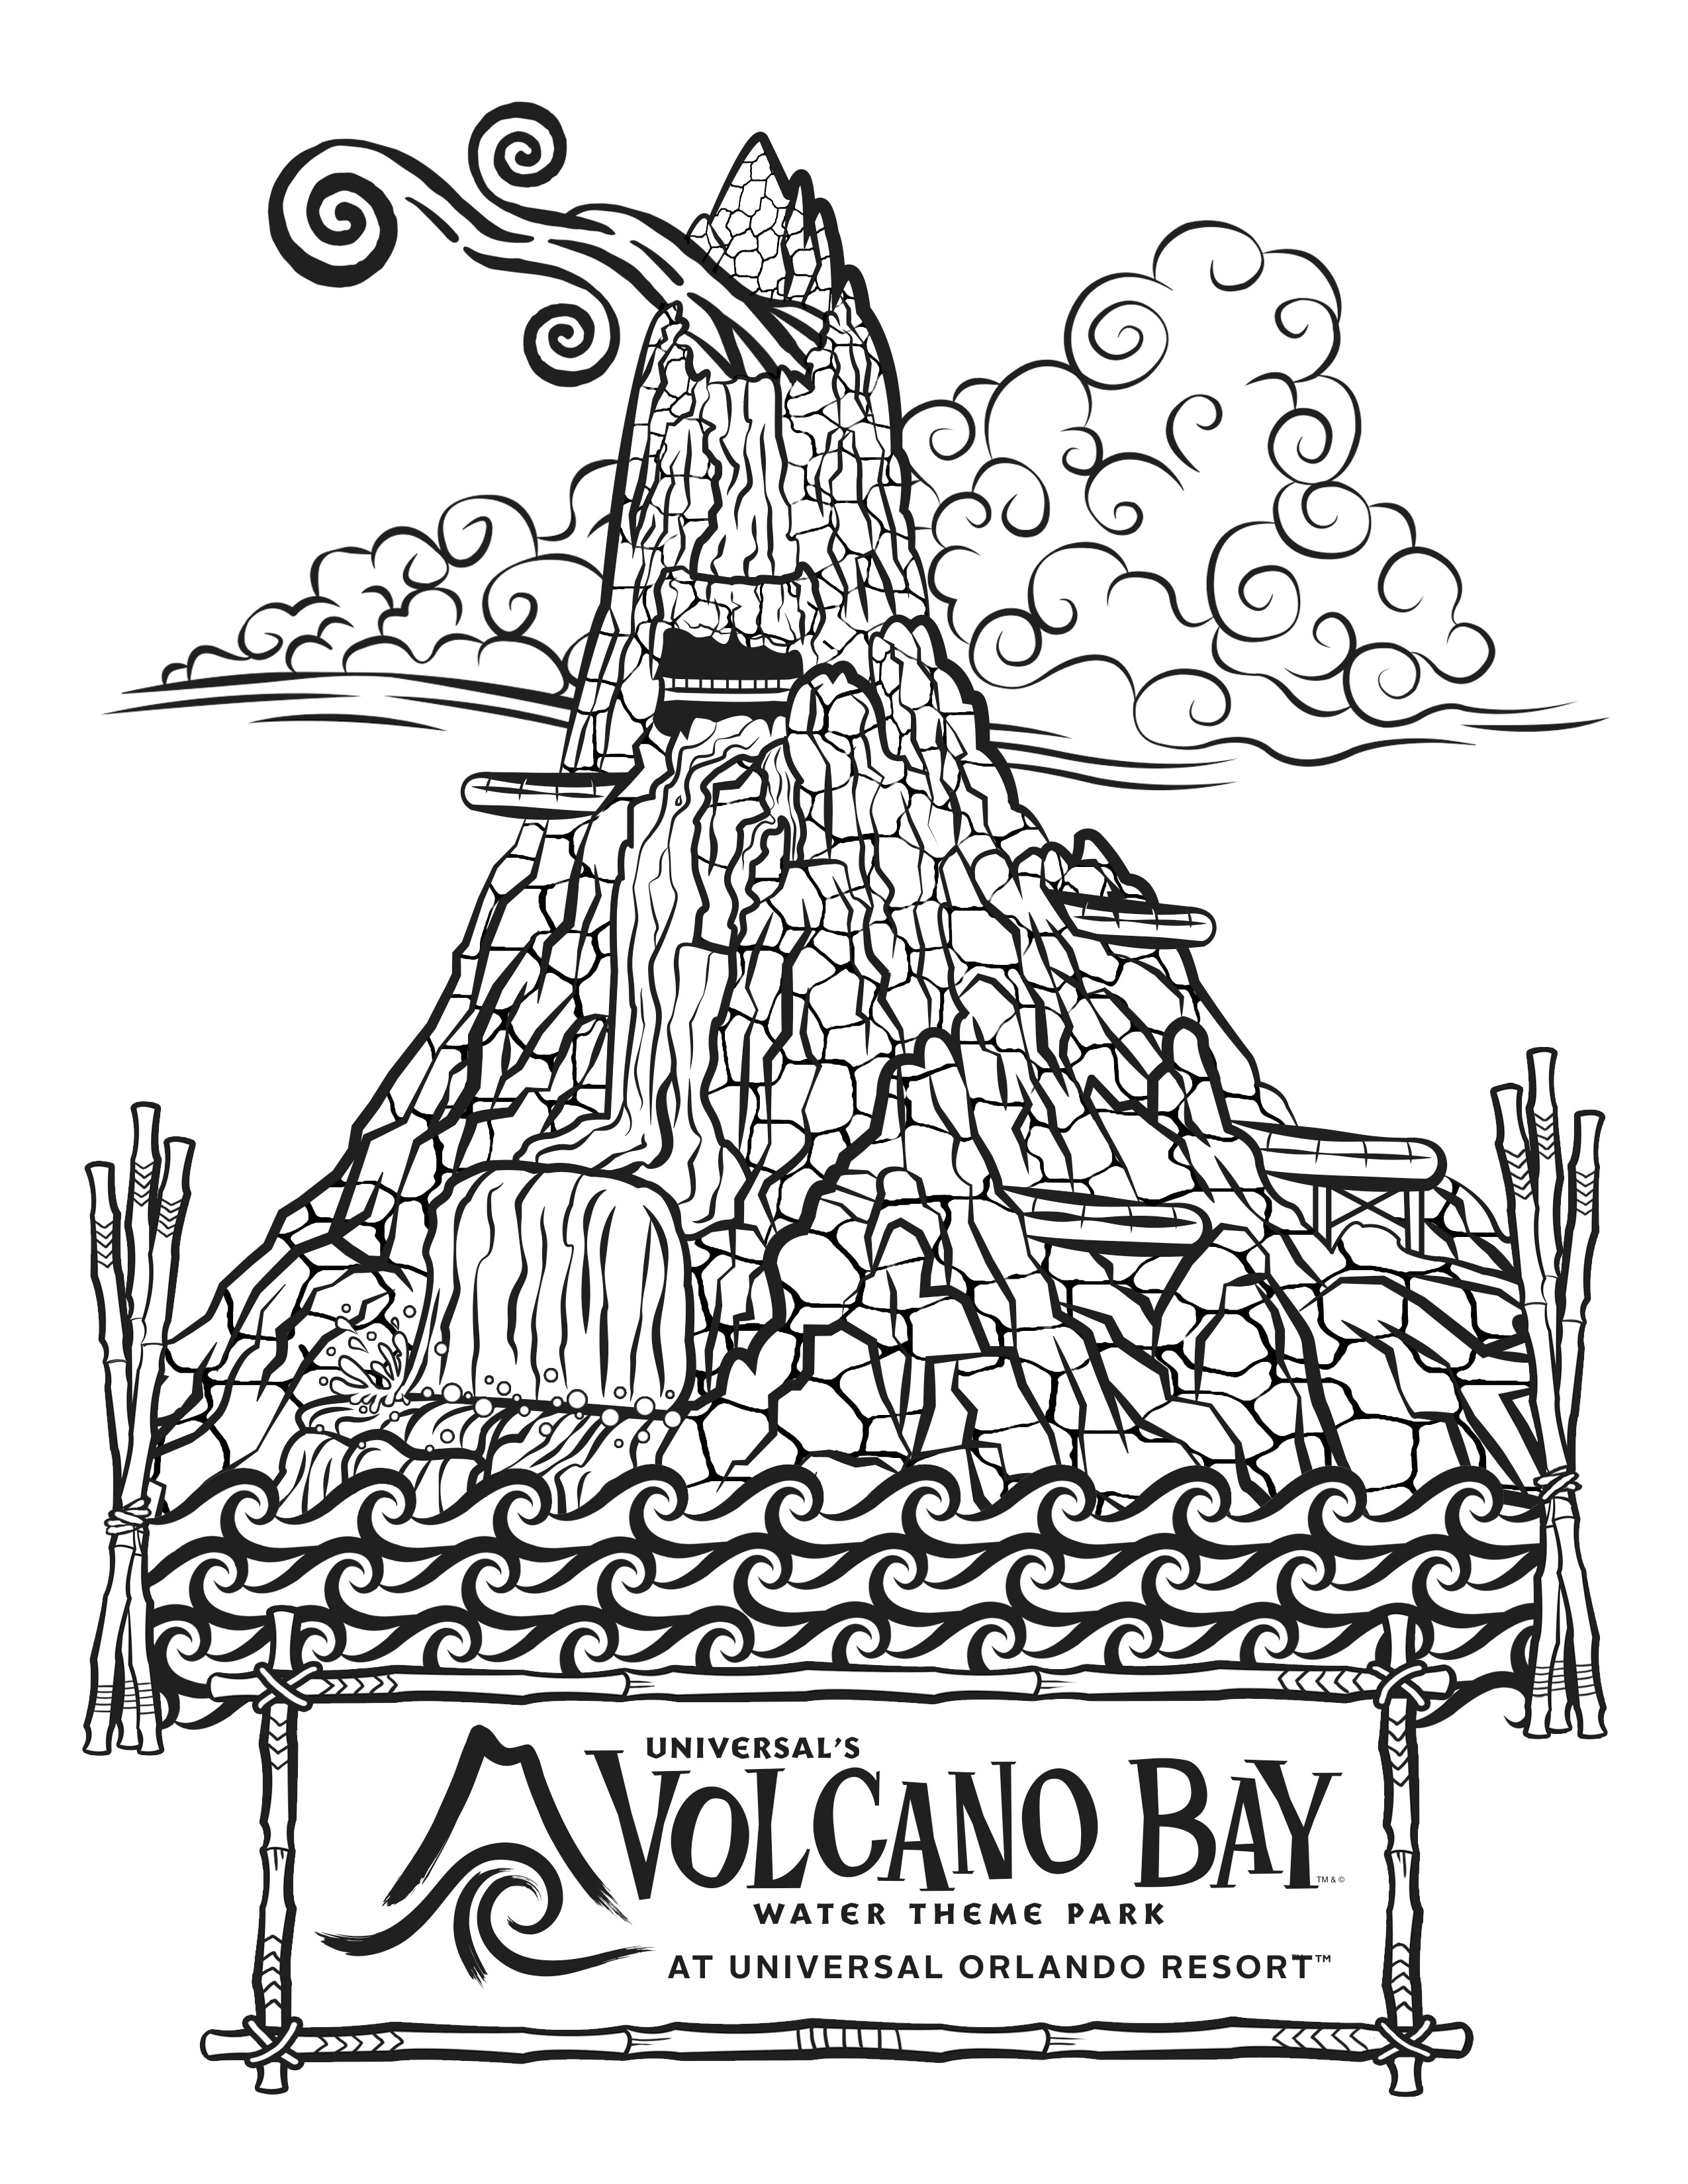 Universal's Volcano Bay Krakatau Coloring Page